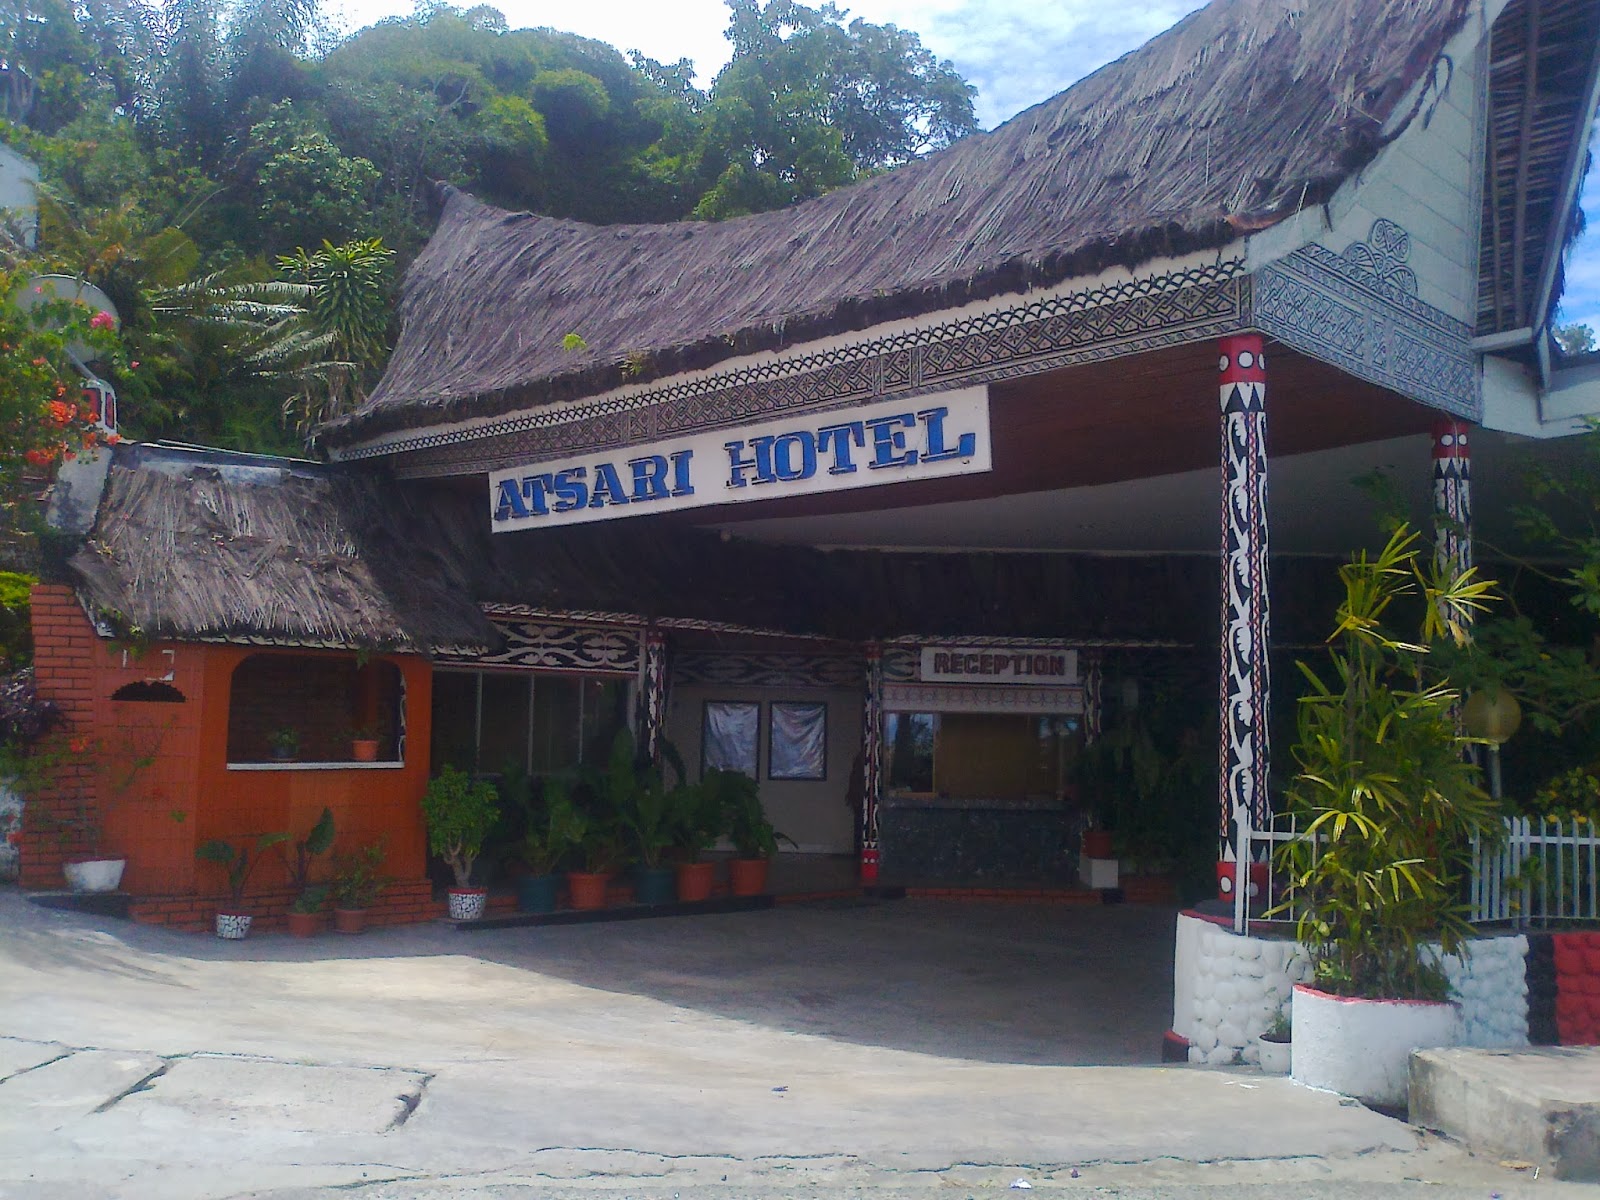 Astari Hotel Parapat Medan Sumatra Indonesia